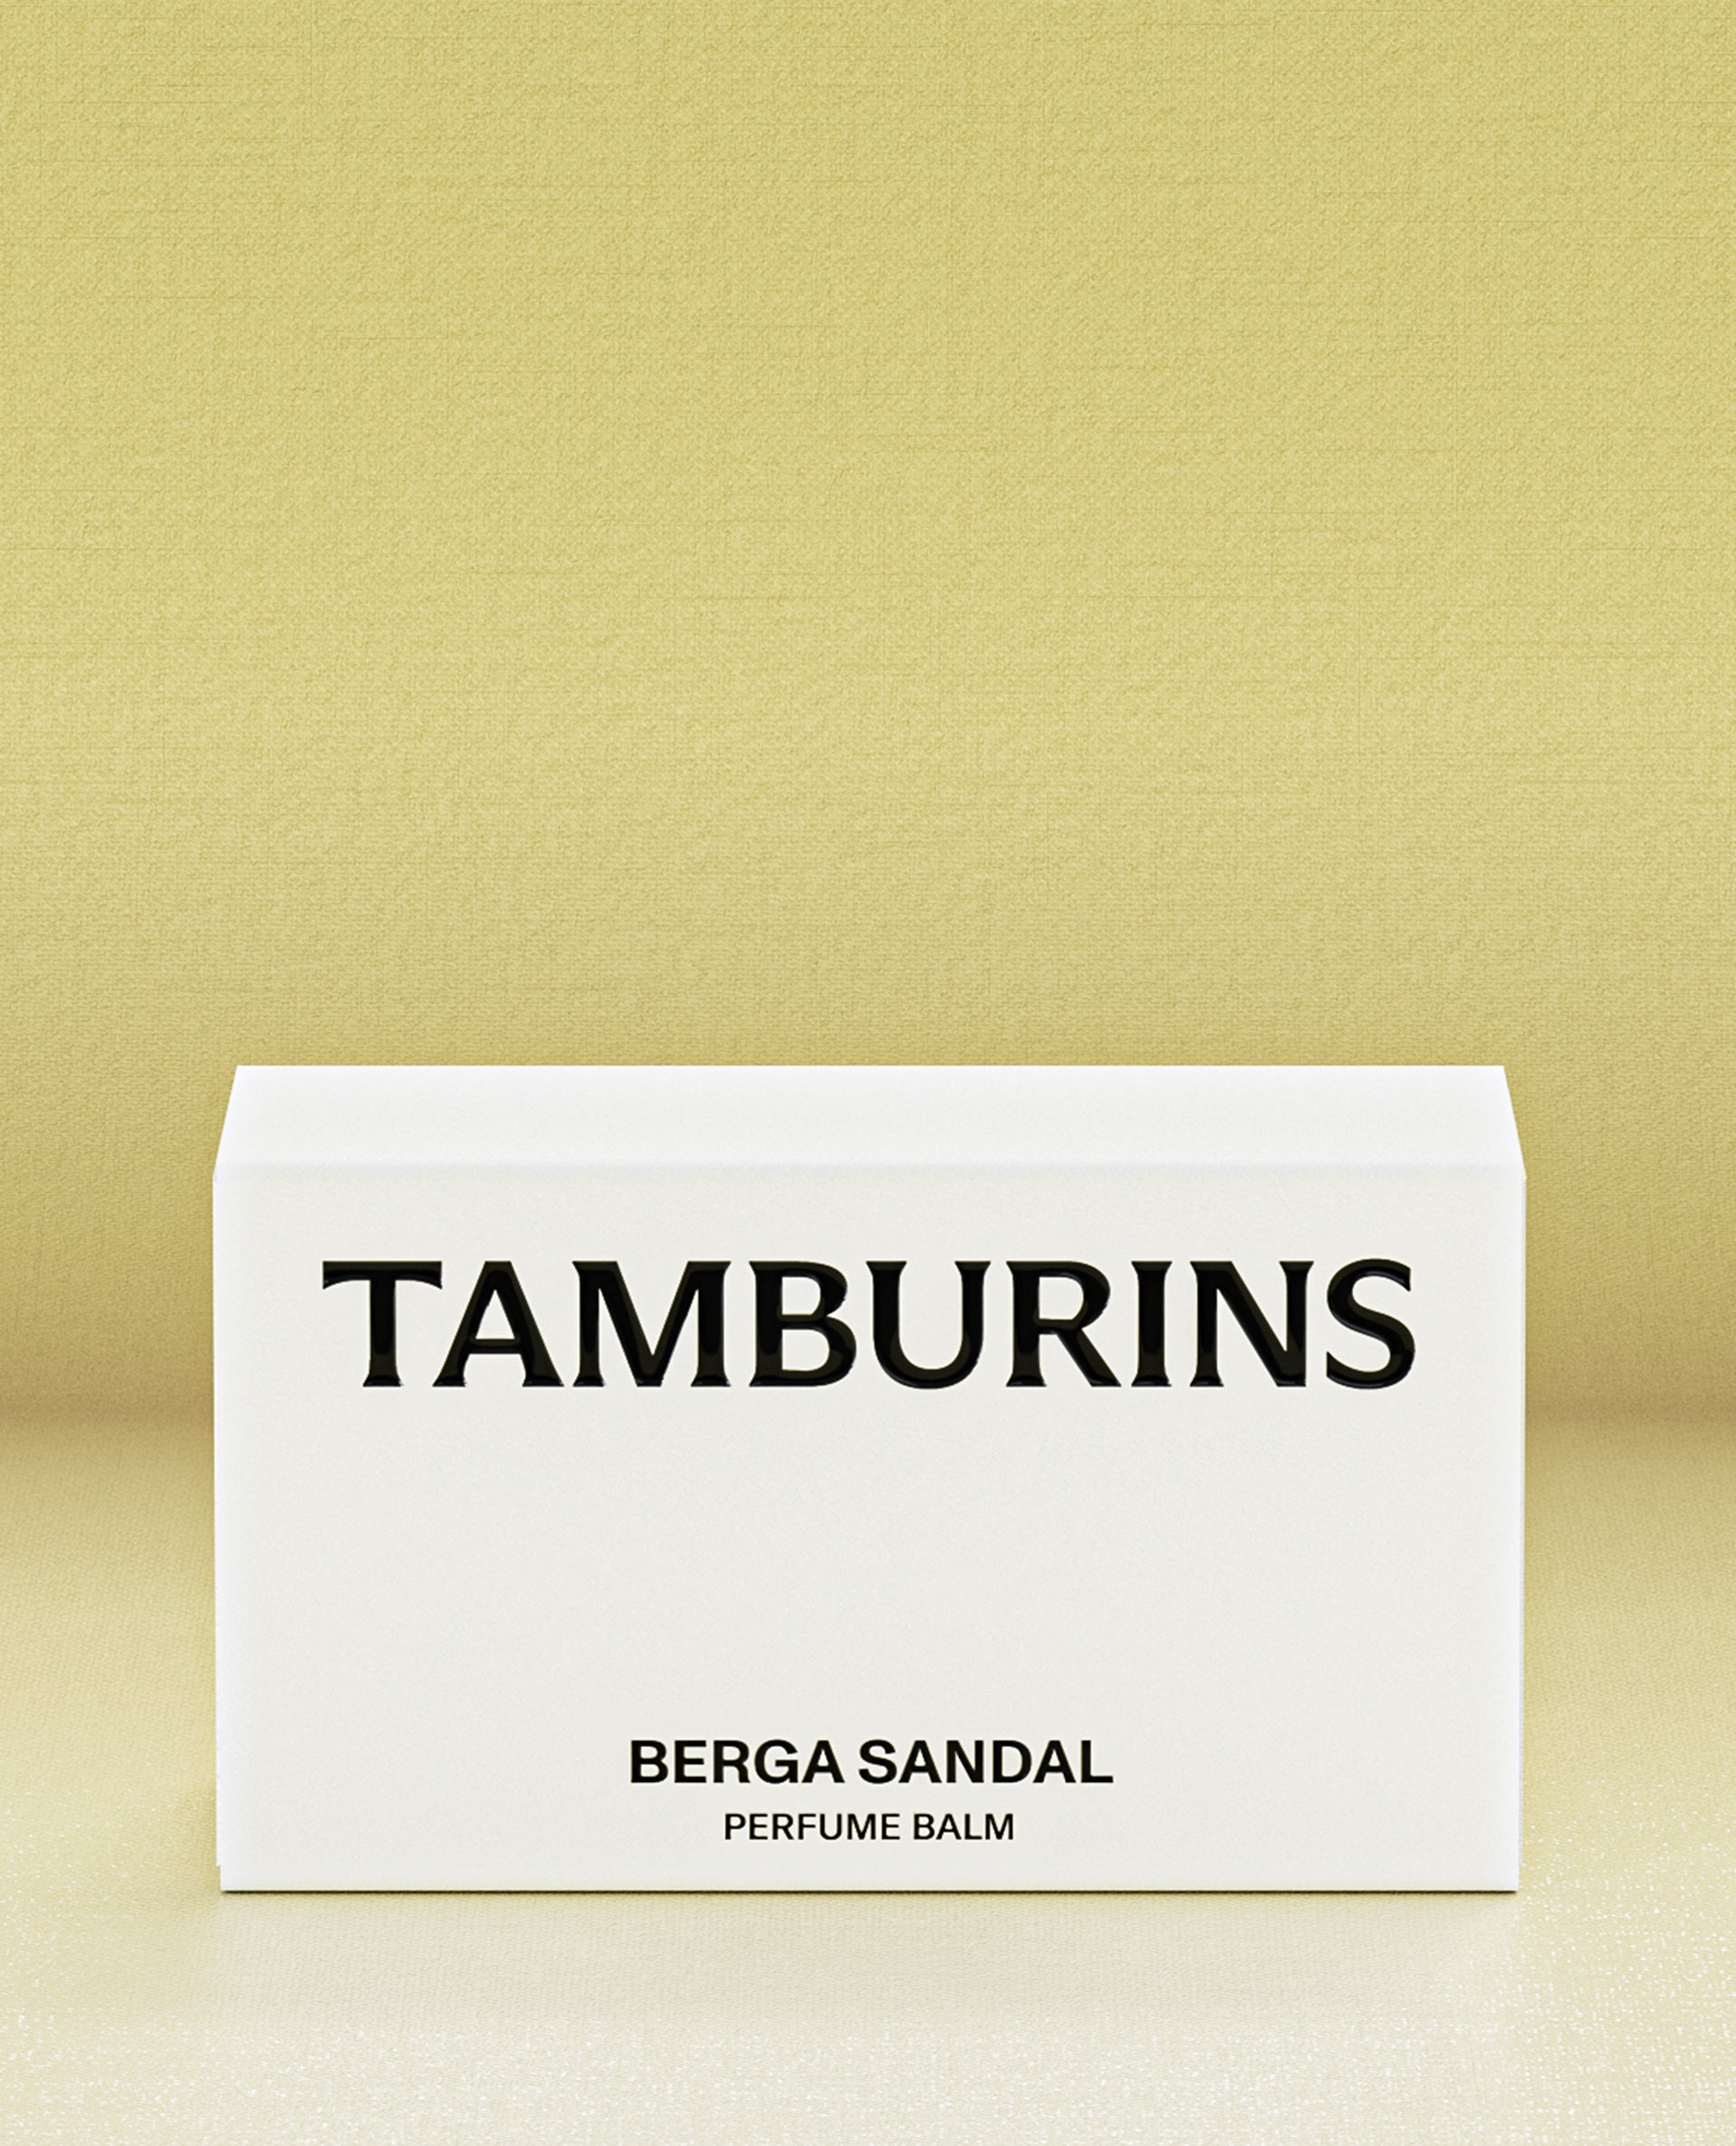 TAMBURINS Perfume Balm Berga Sandal 6.5g with an elegent box